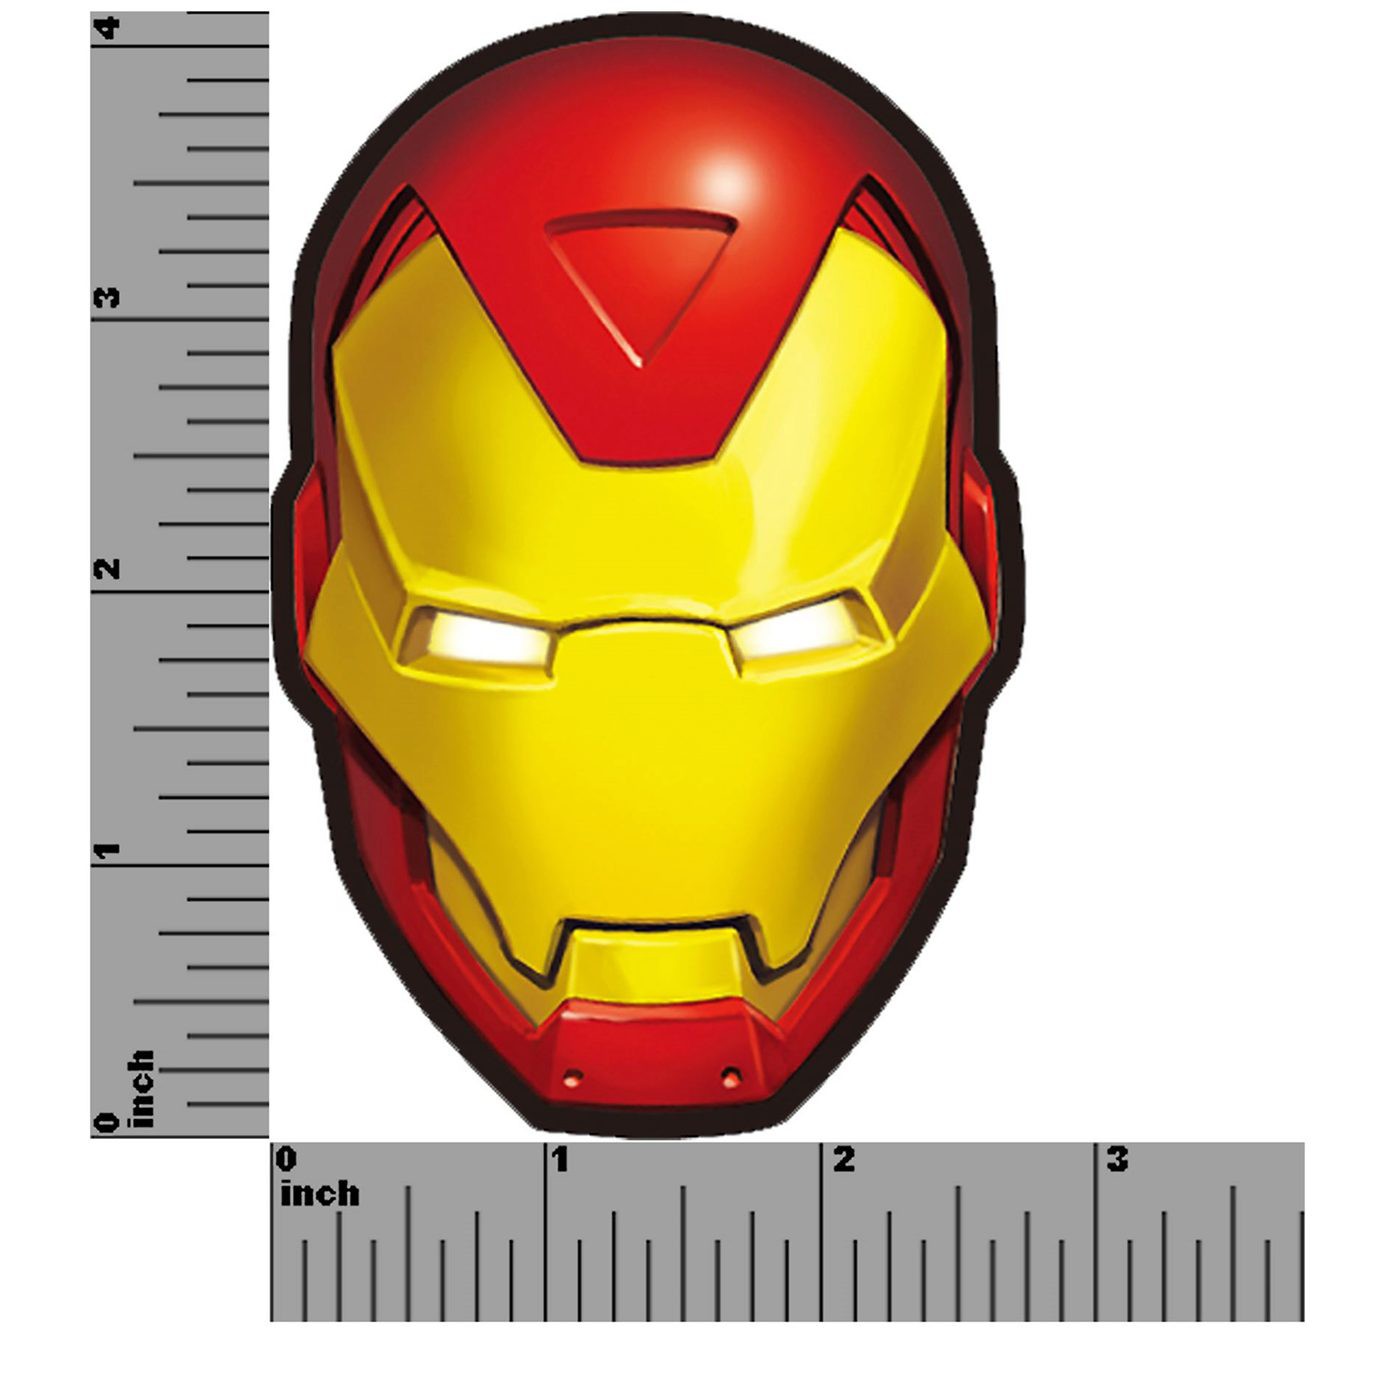 Iron Man Modern Helmet Magnet